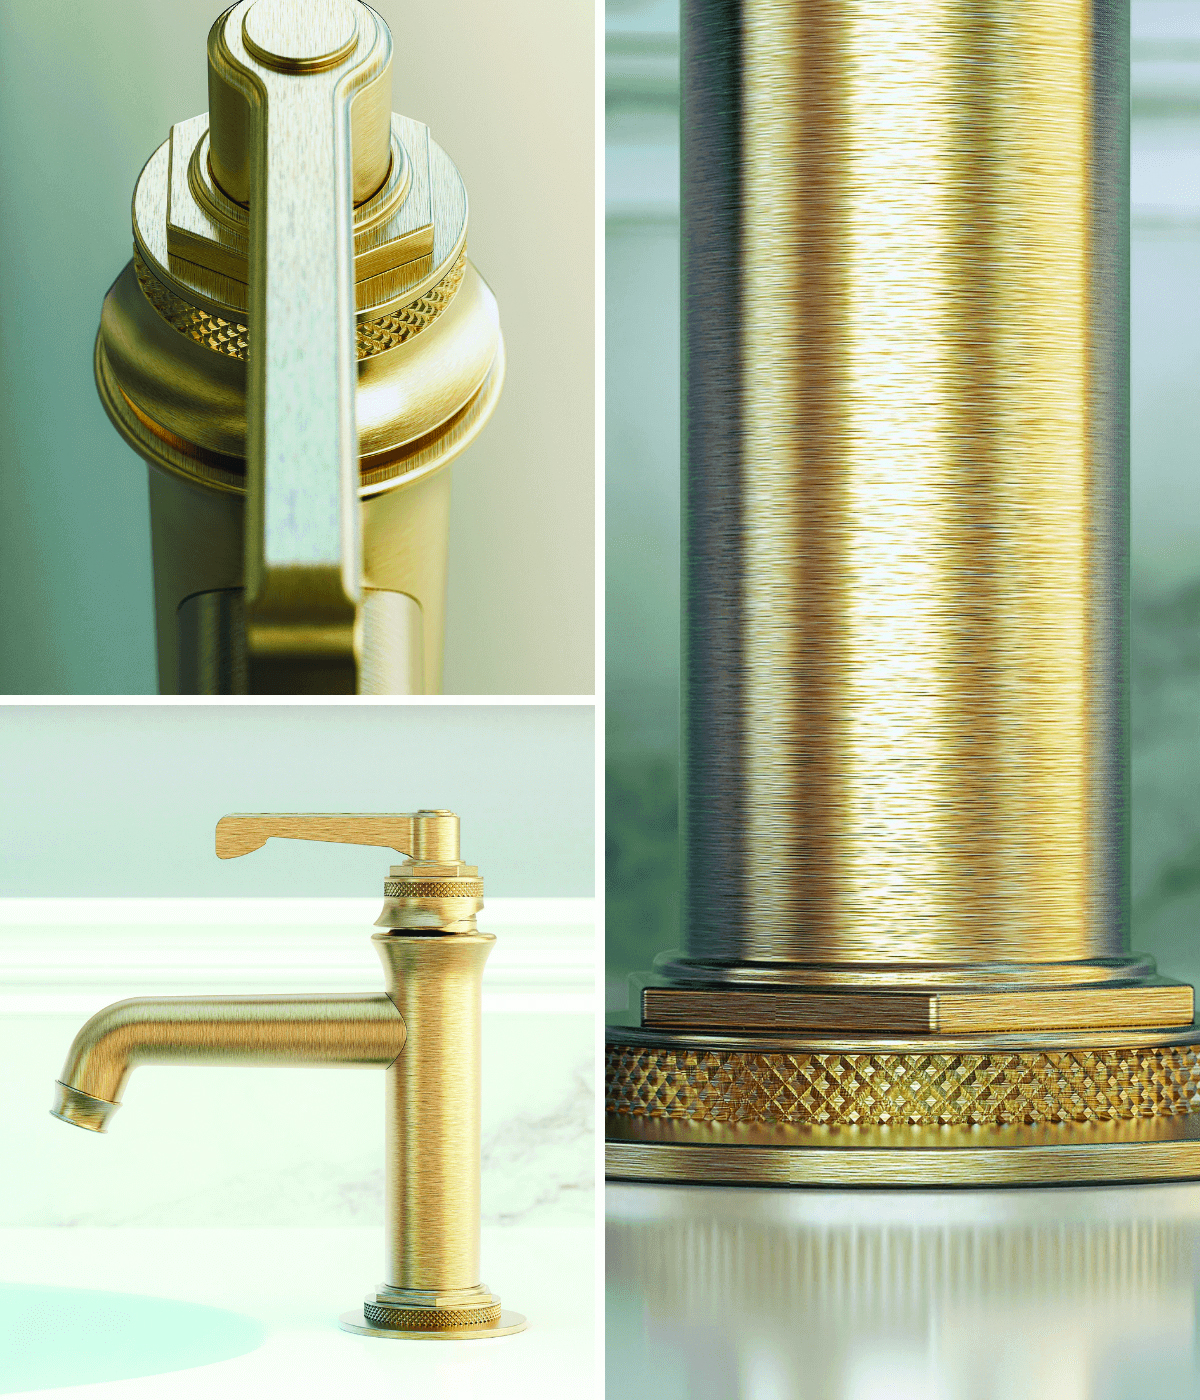 TW0224_Graff-faucet-knurling-detail.jpg